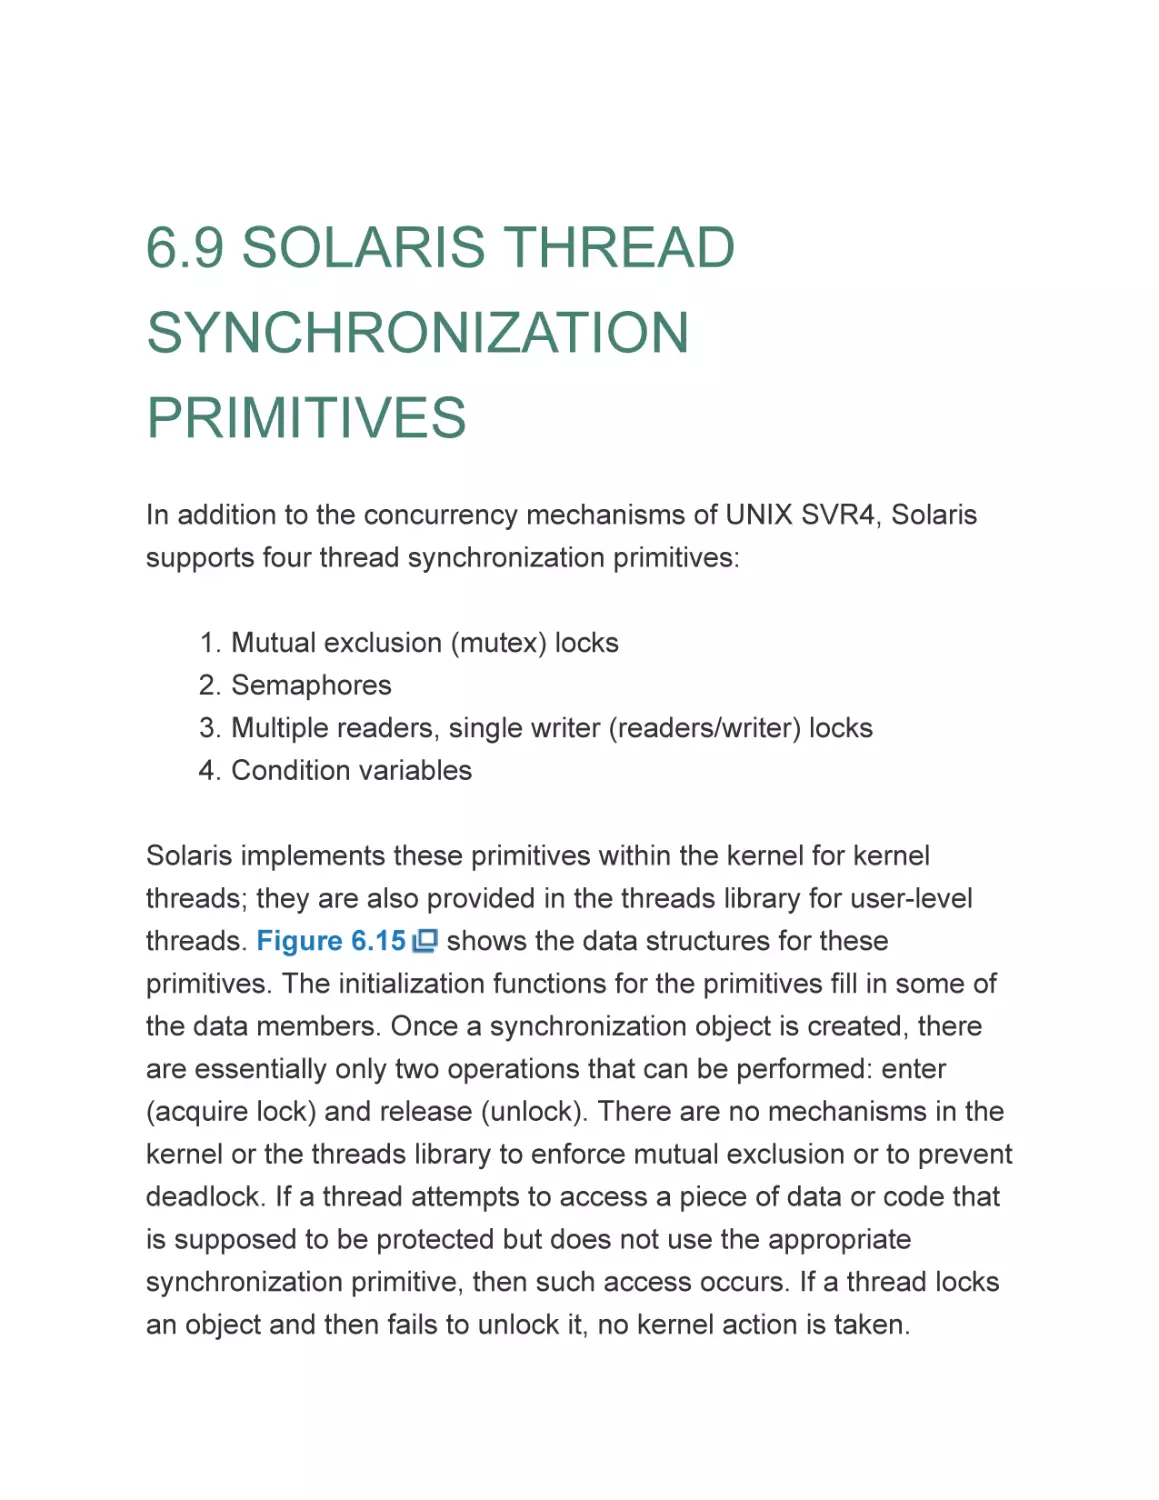 6.9 SOLARIS THREAD SYNCHRONIZATION PRIMITIVES